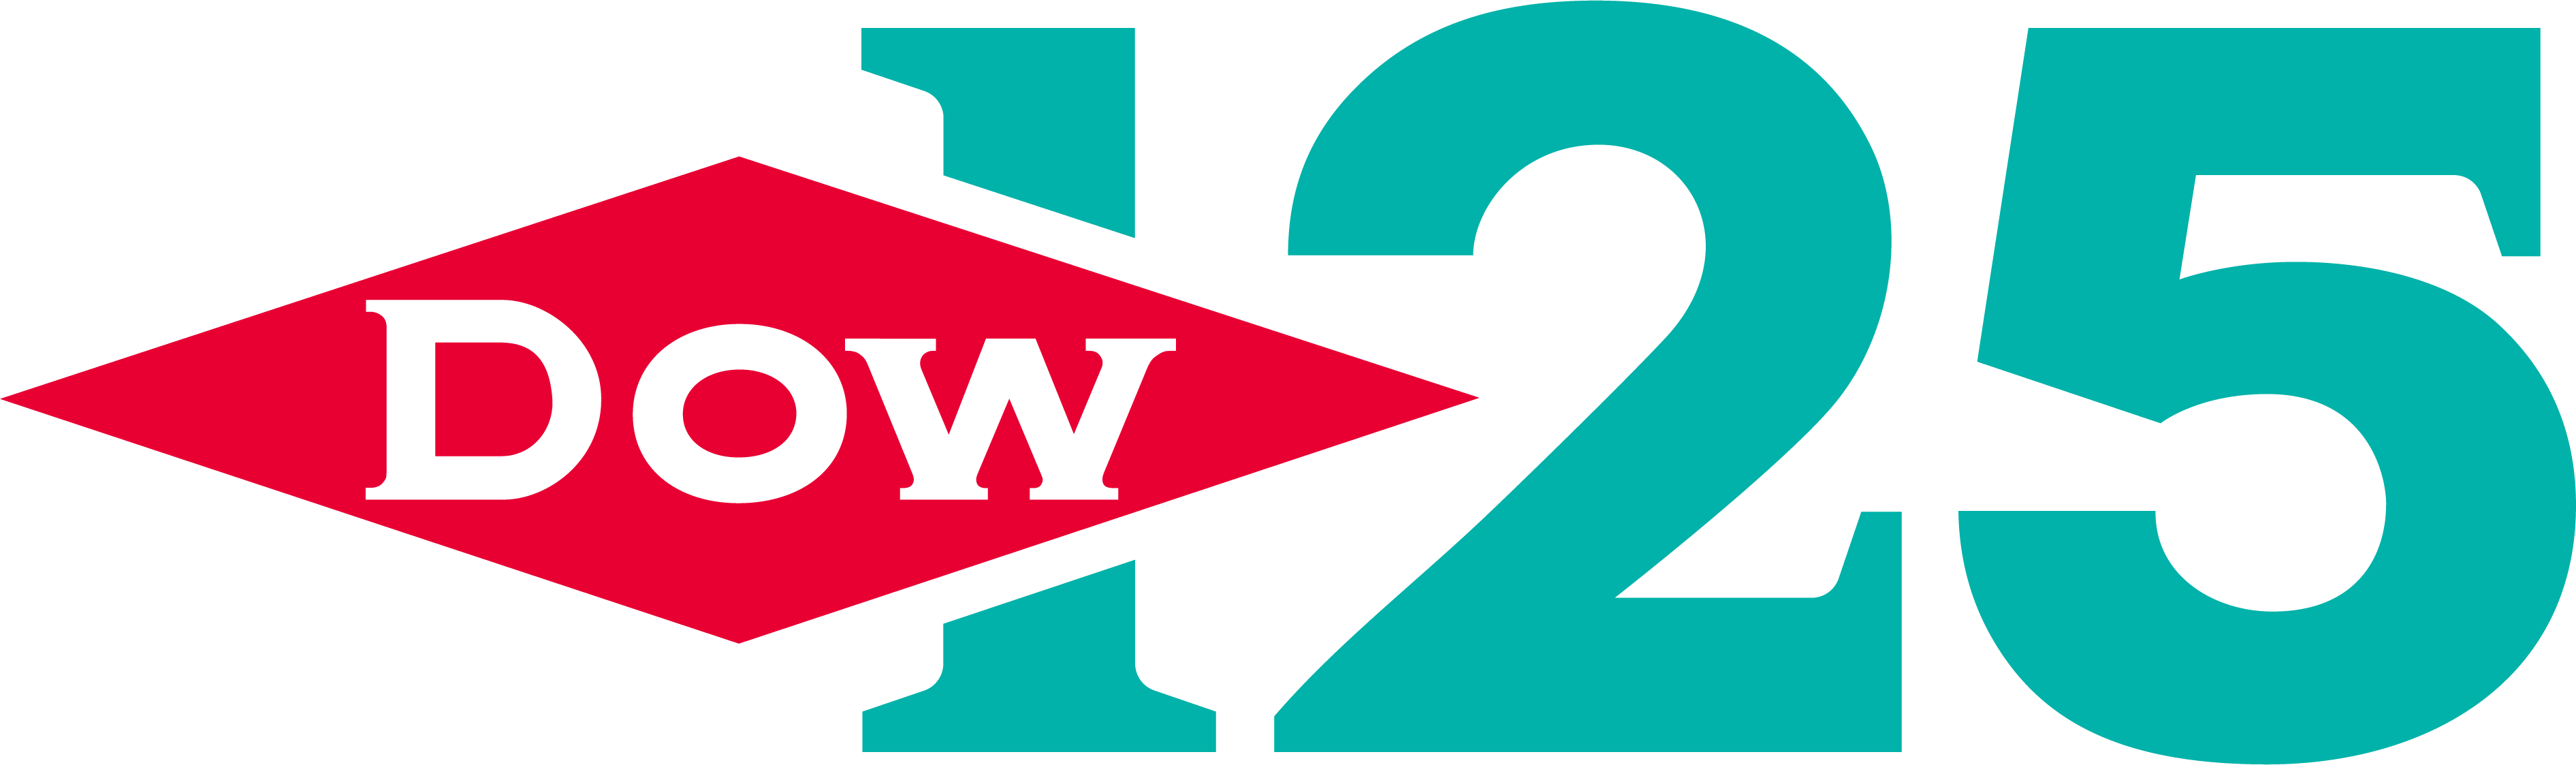 Dow´s 125th anniversary logo